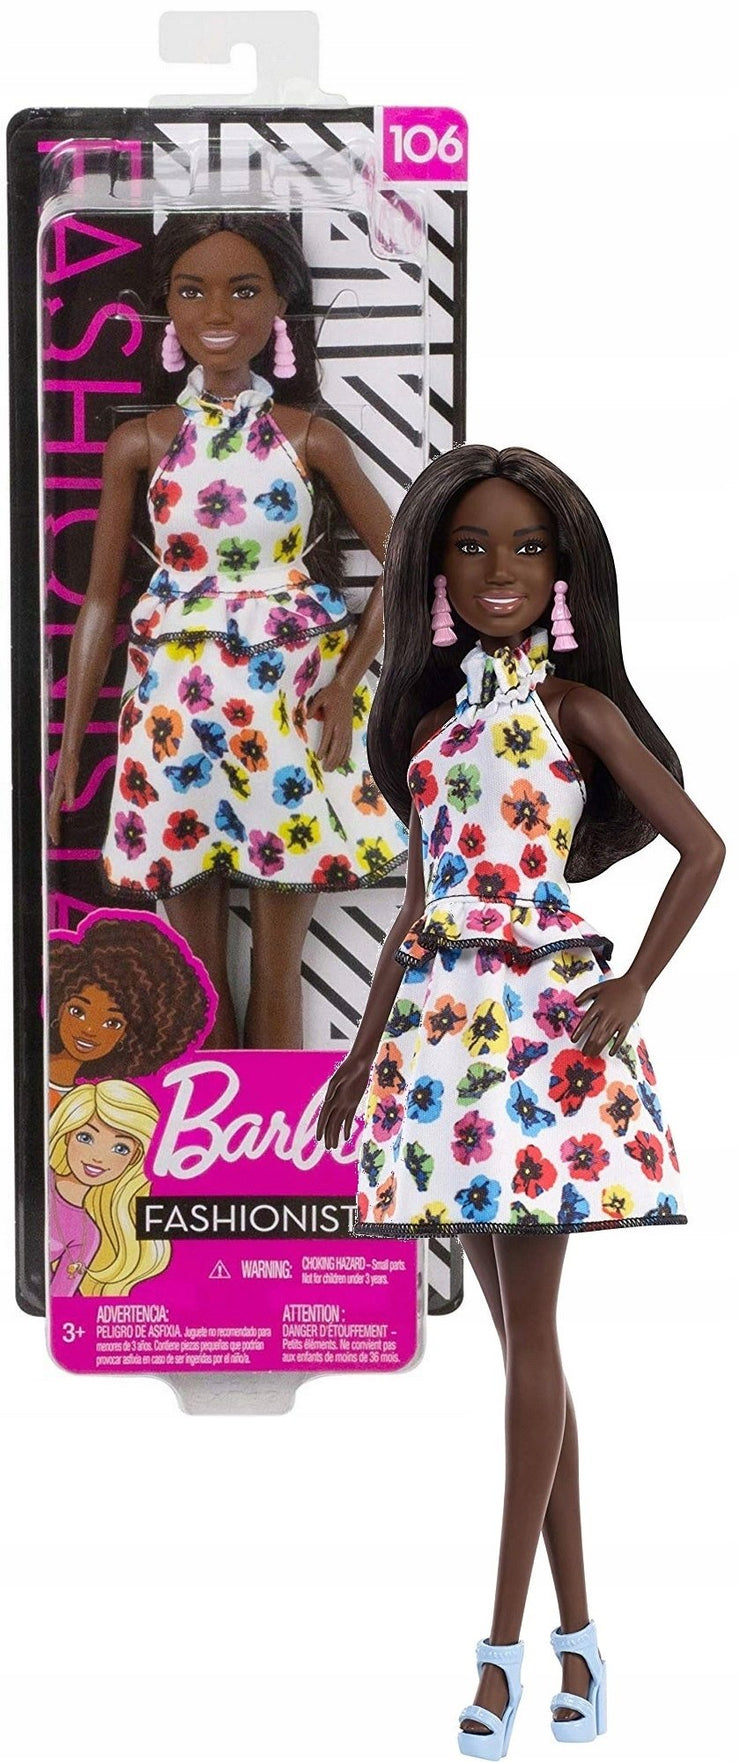 Barbie Fashionista 106